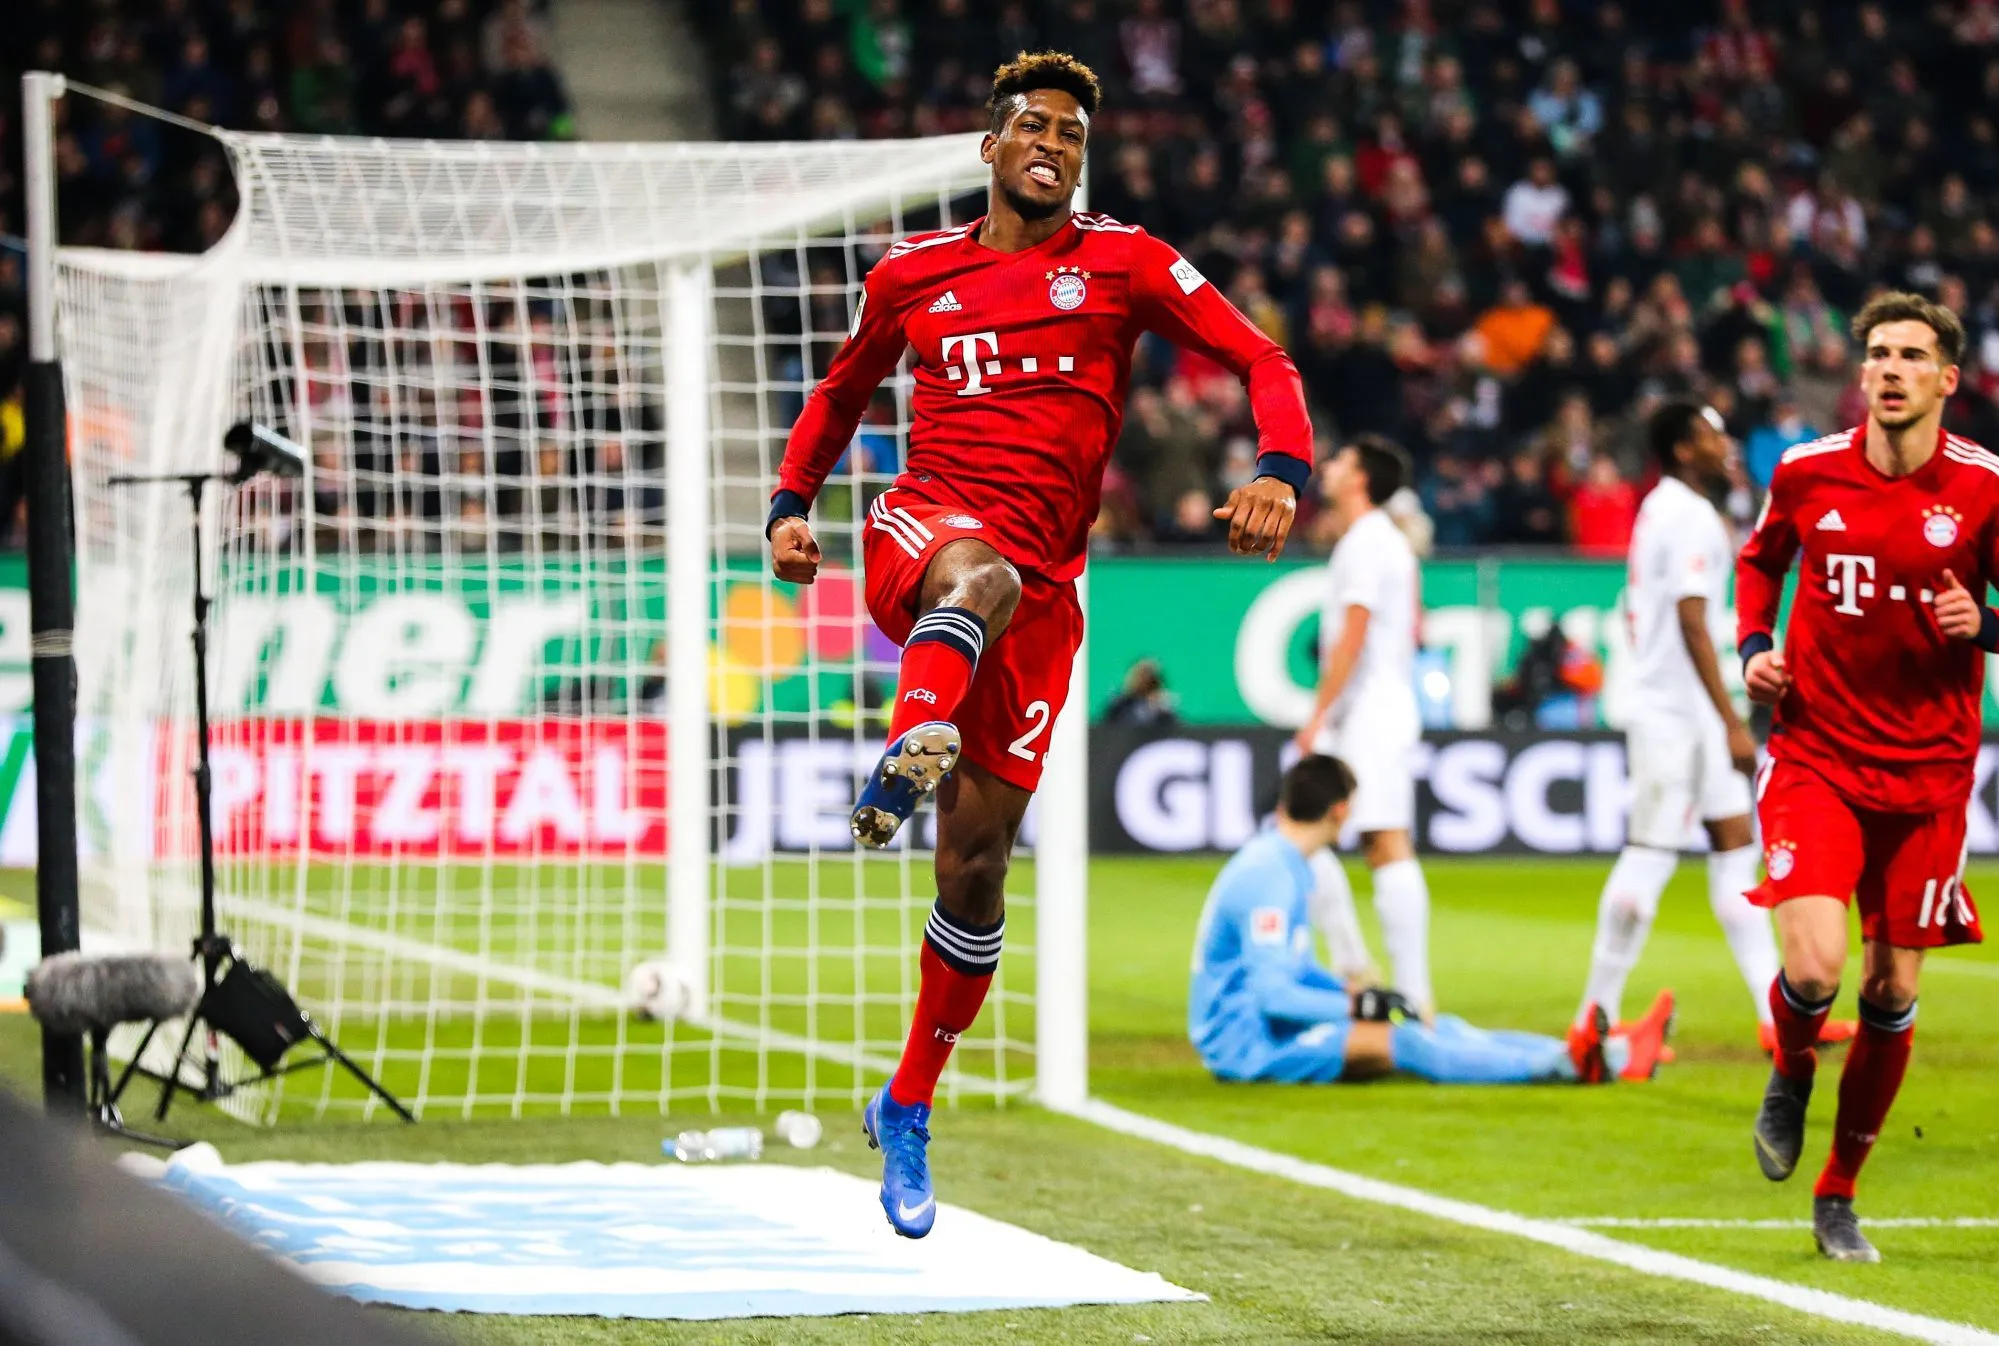 Victoire folle du Bayern Munich à Augsbourg